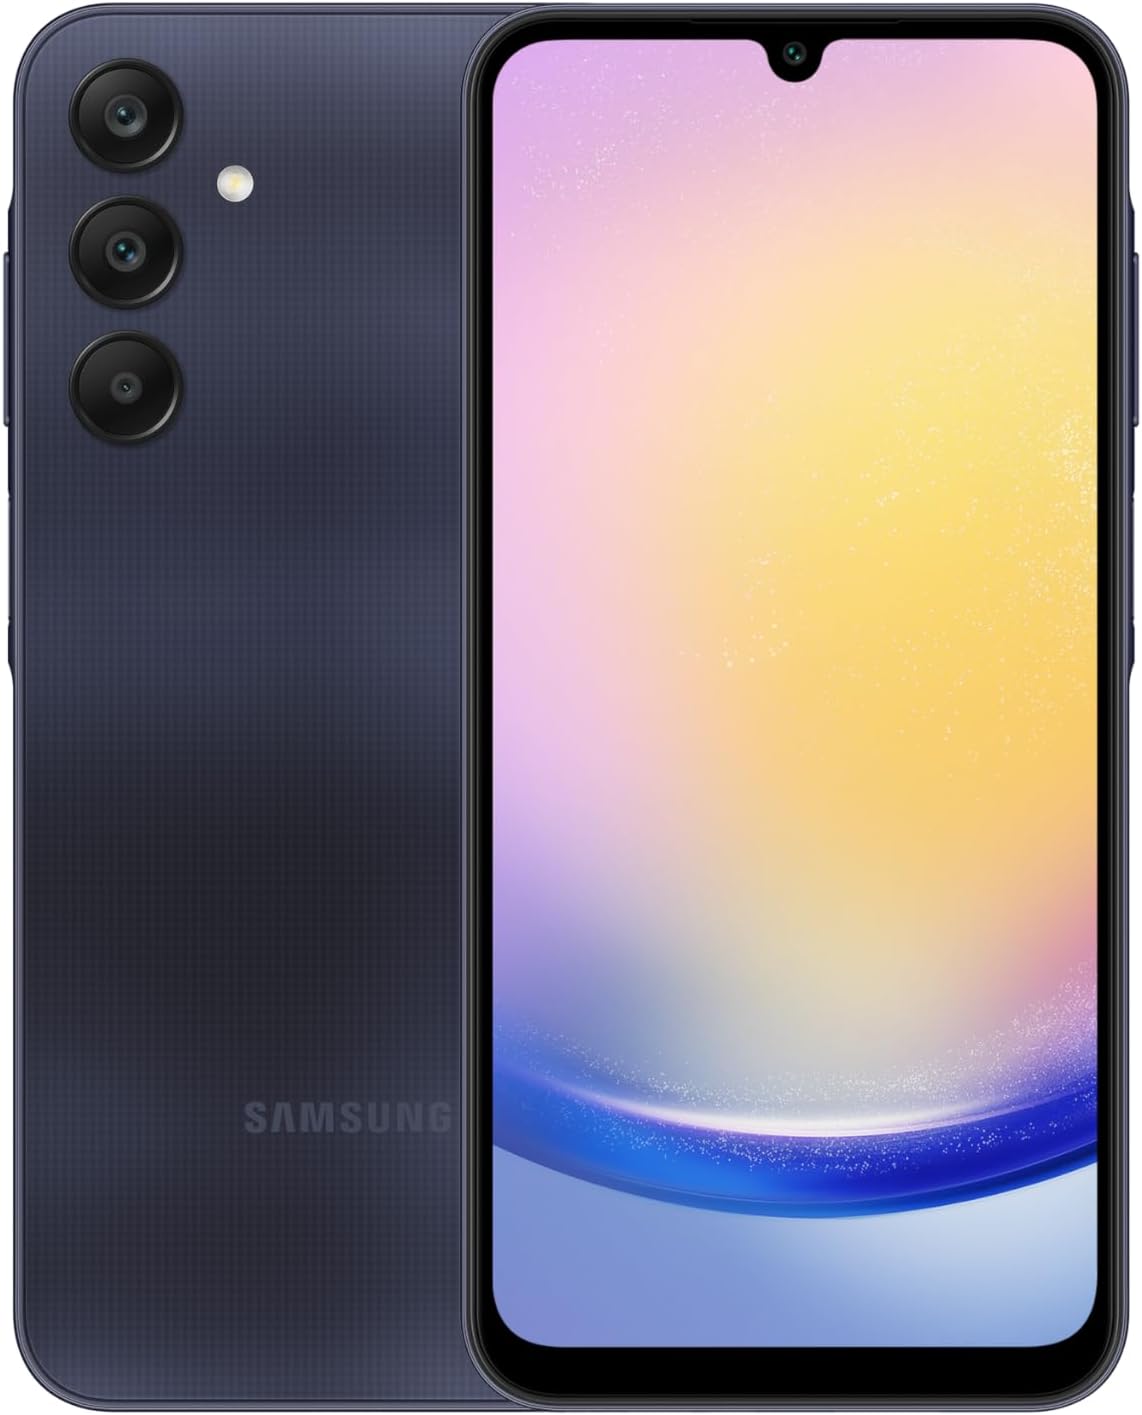 Samsung Galaxy A25 5G, Android Smartphone, Dual SIM Mobile Phone, 6GB RAM, 128GB Storage, Blue Black